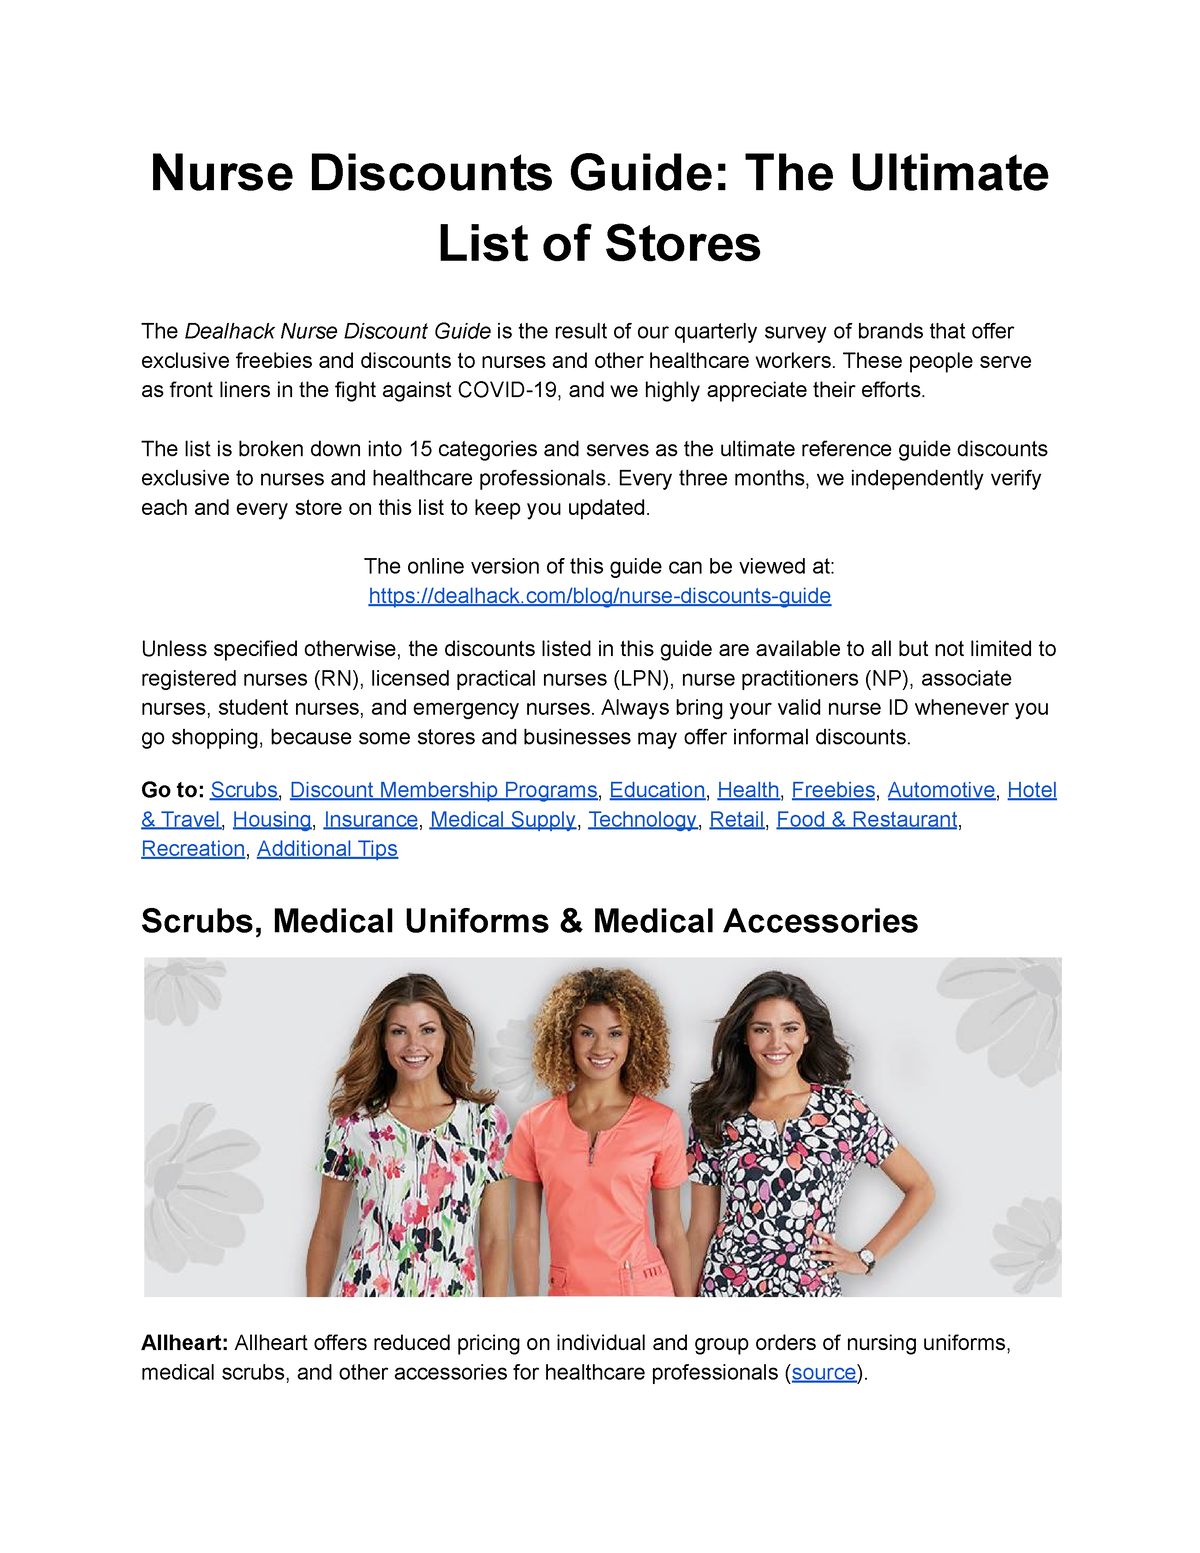 NurseDiscountGuide Nurse Discounts Guide The Ultimate List of Stores The Dealhack Nurse